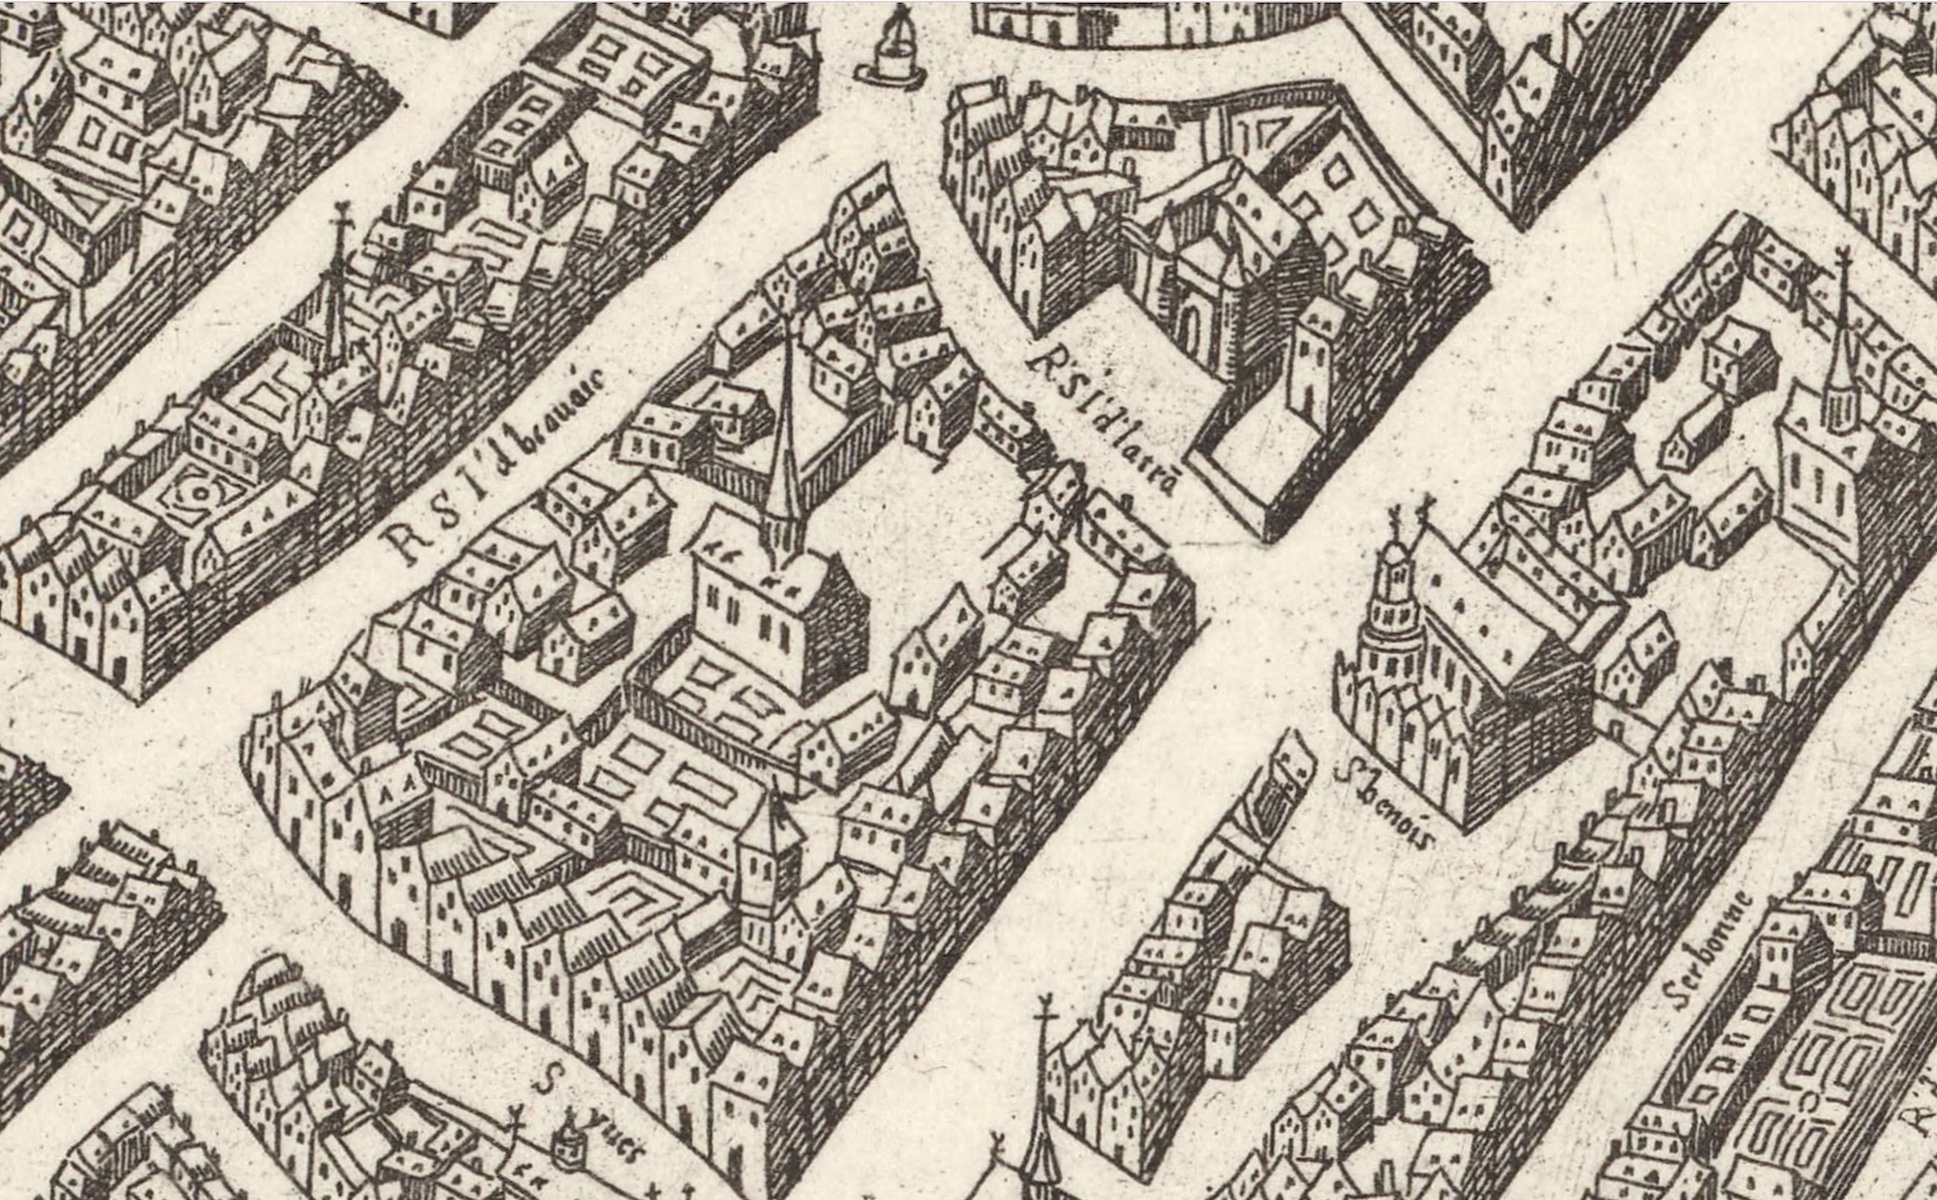 Rue Saint-Jean-de-Latran (1609)